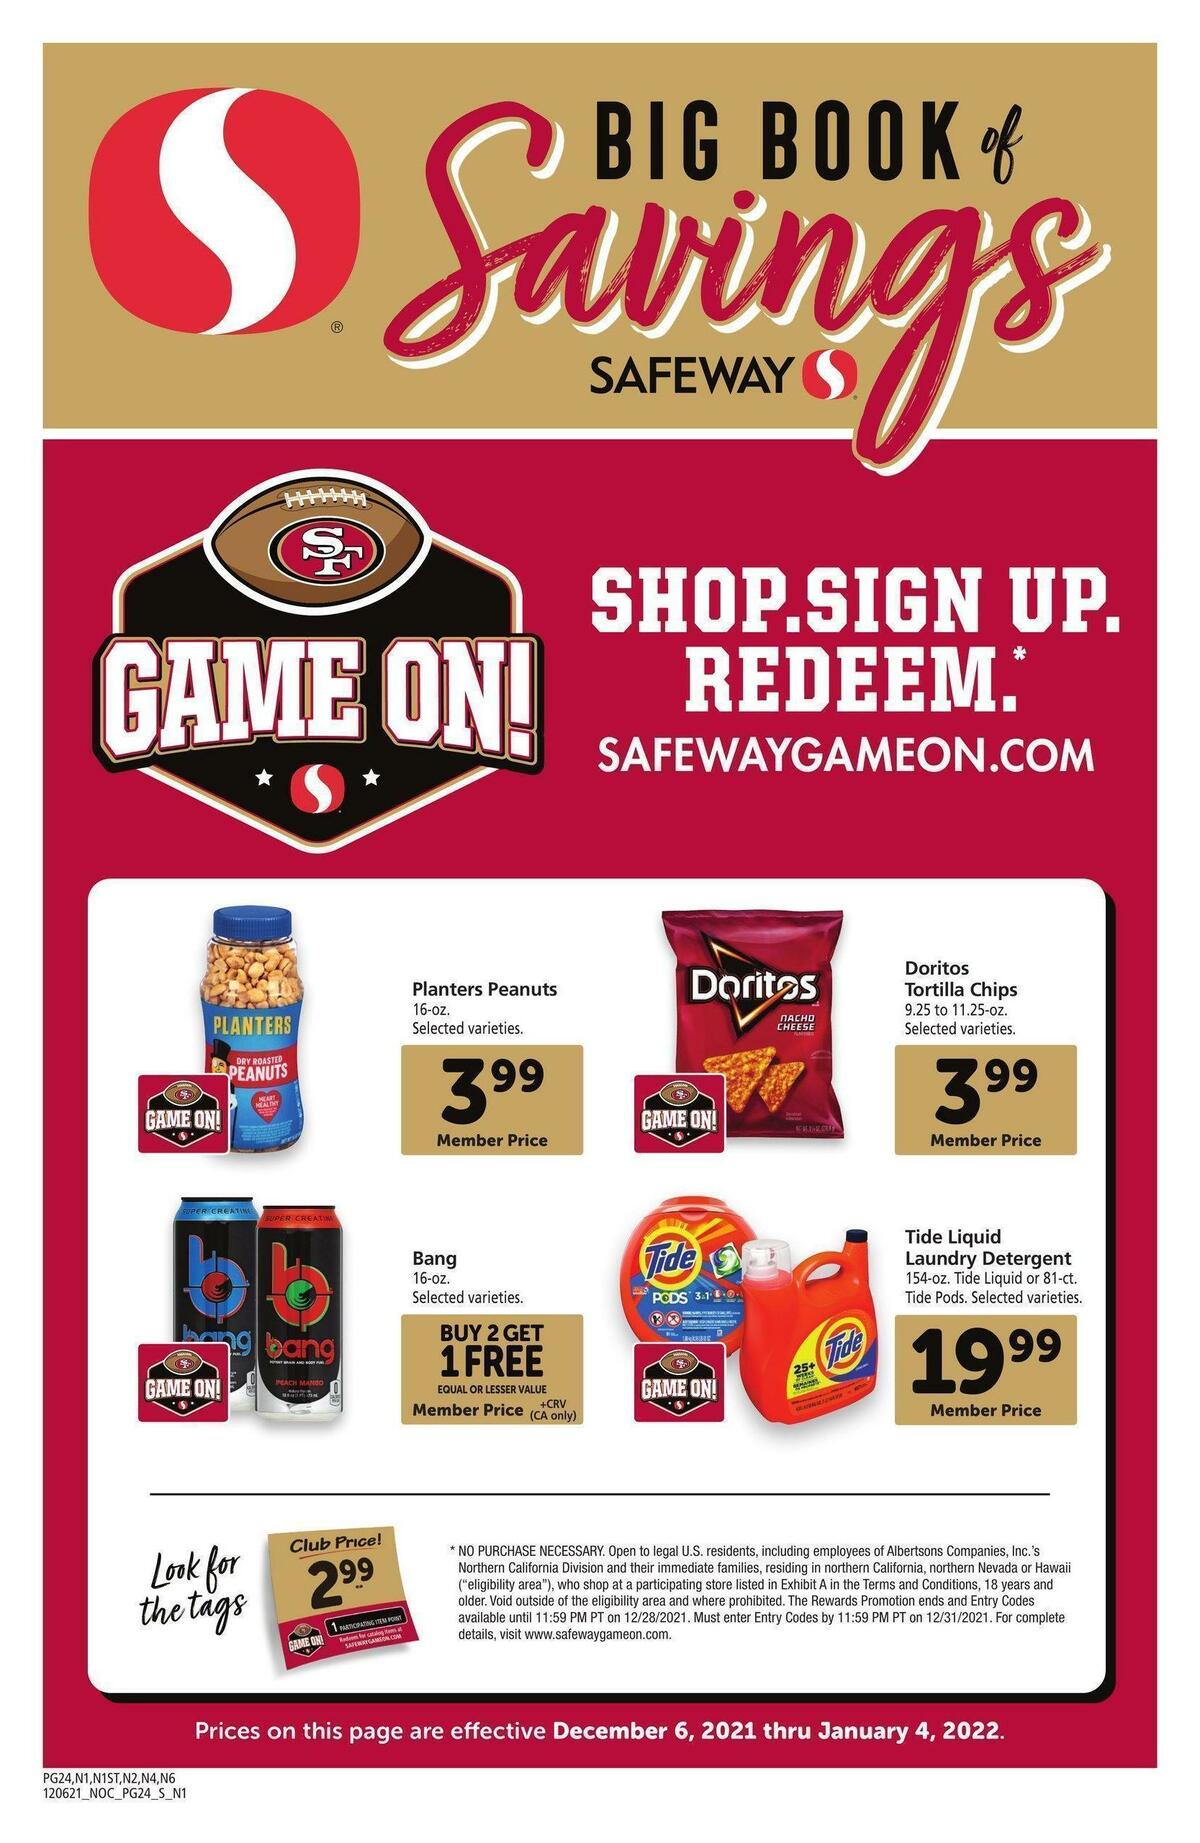 Safeway Big Book of Savings Weekly Ad from December 6